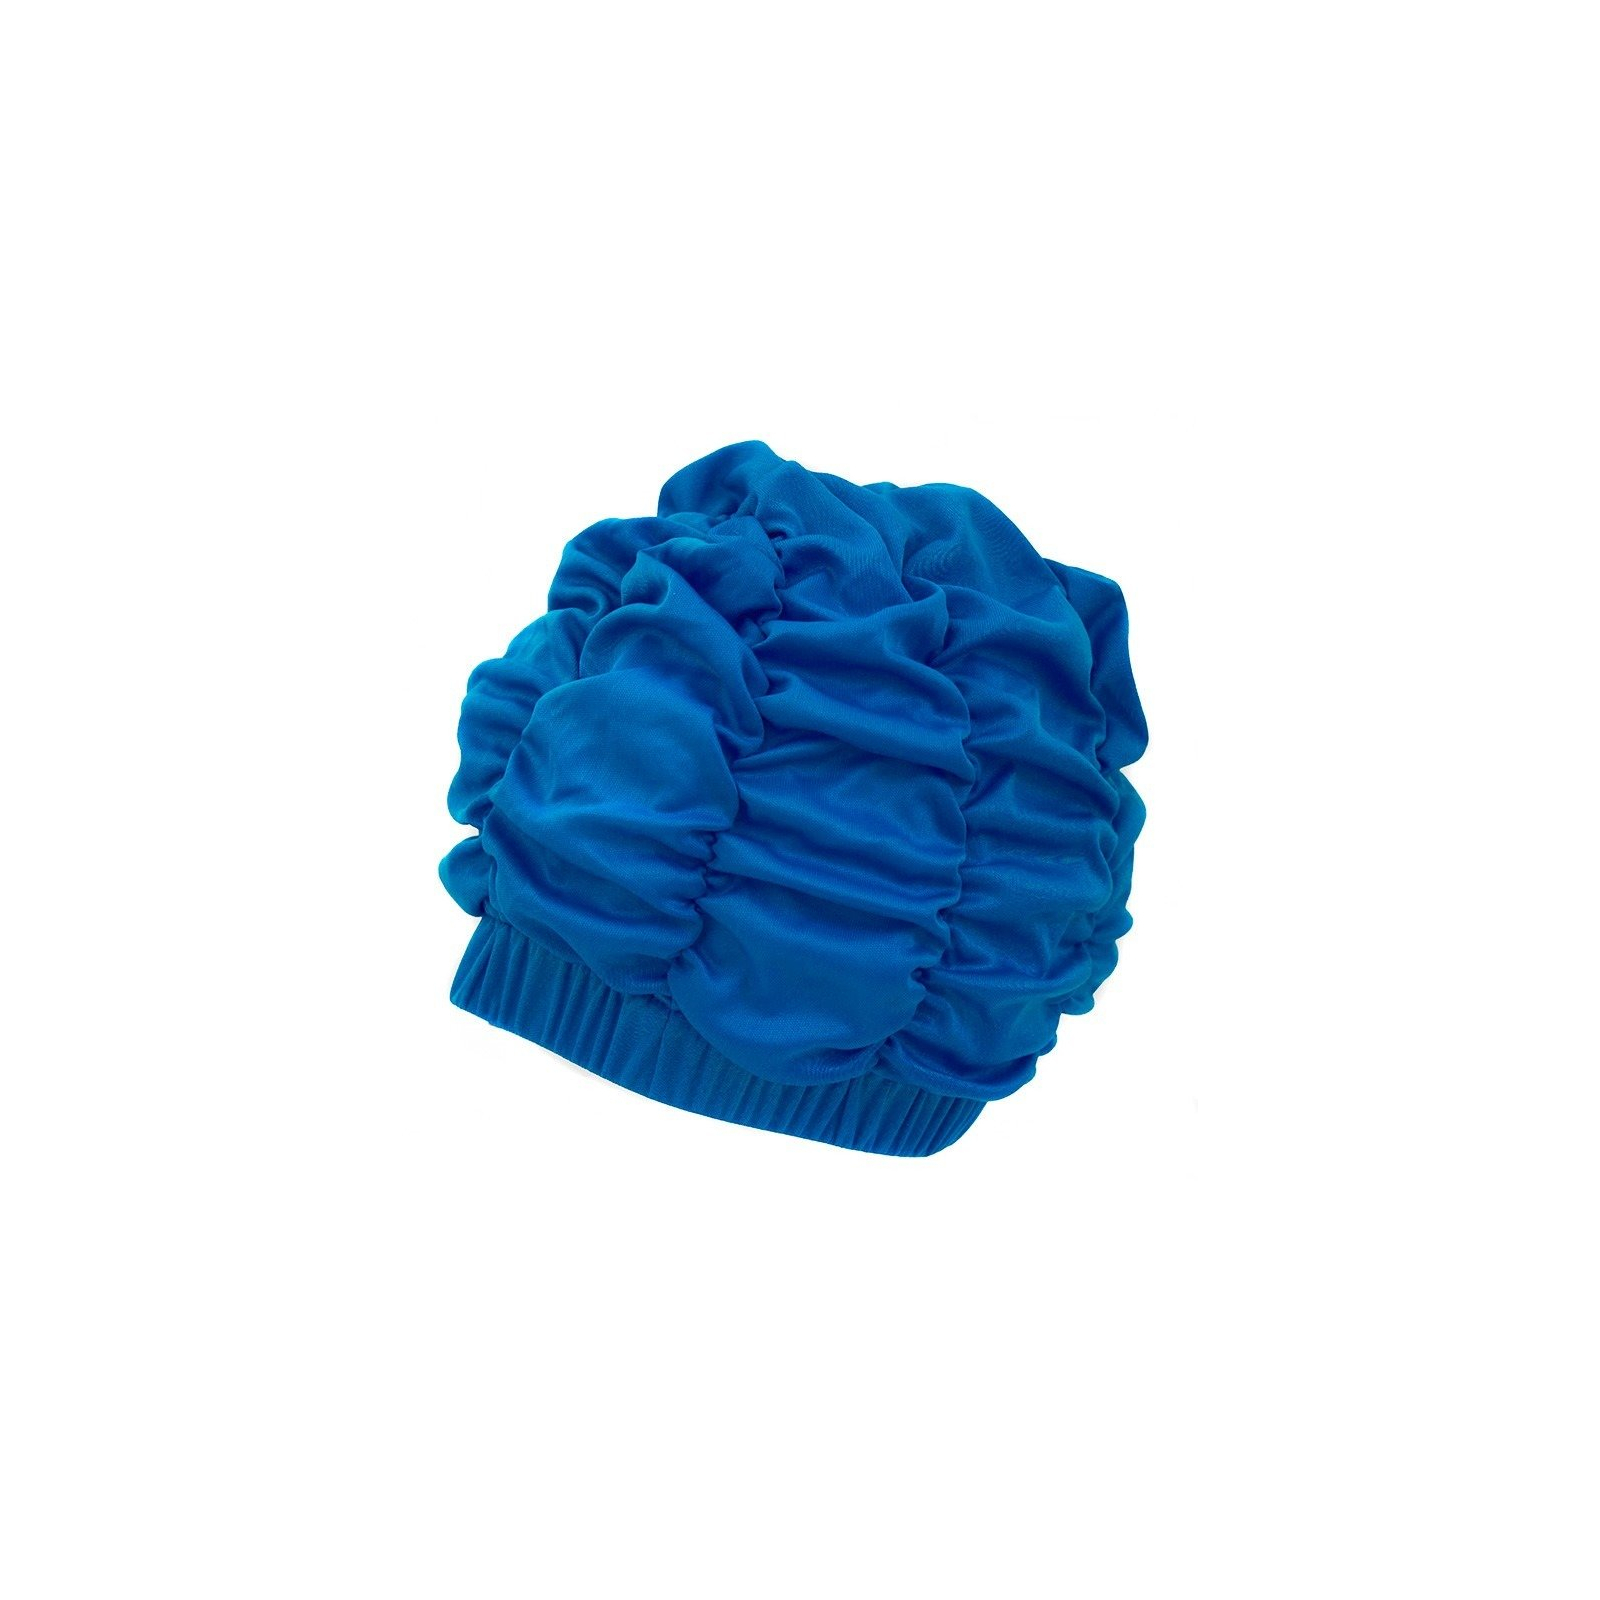 Шапка для плавания Aqua Speed Shower Cap 094-01 5743 темно-синій Жін OSFM (5908217657435)